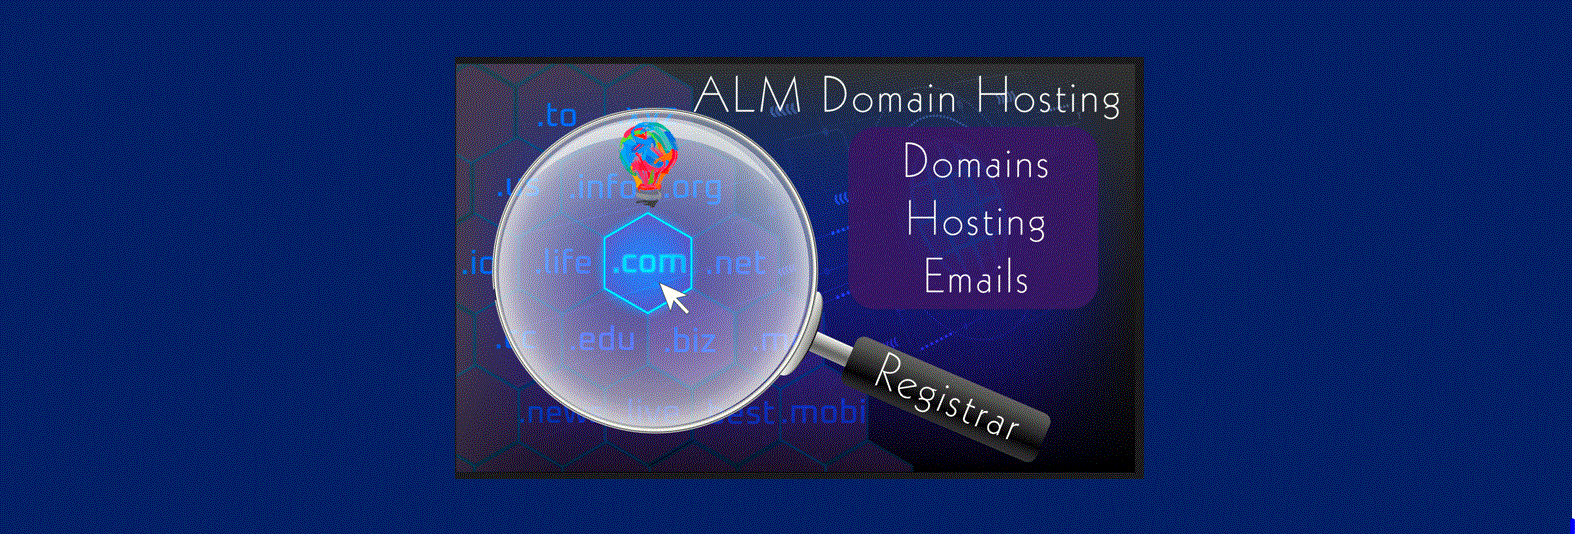 ALM Domain Hosting